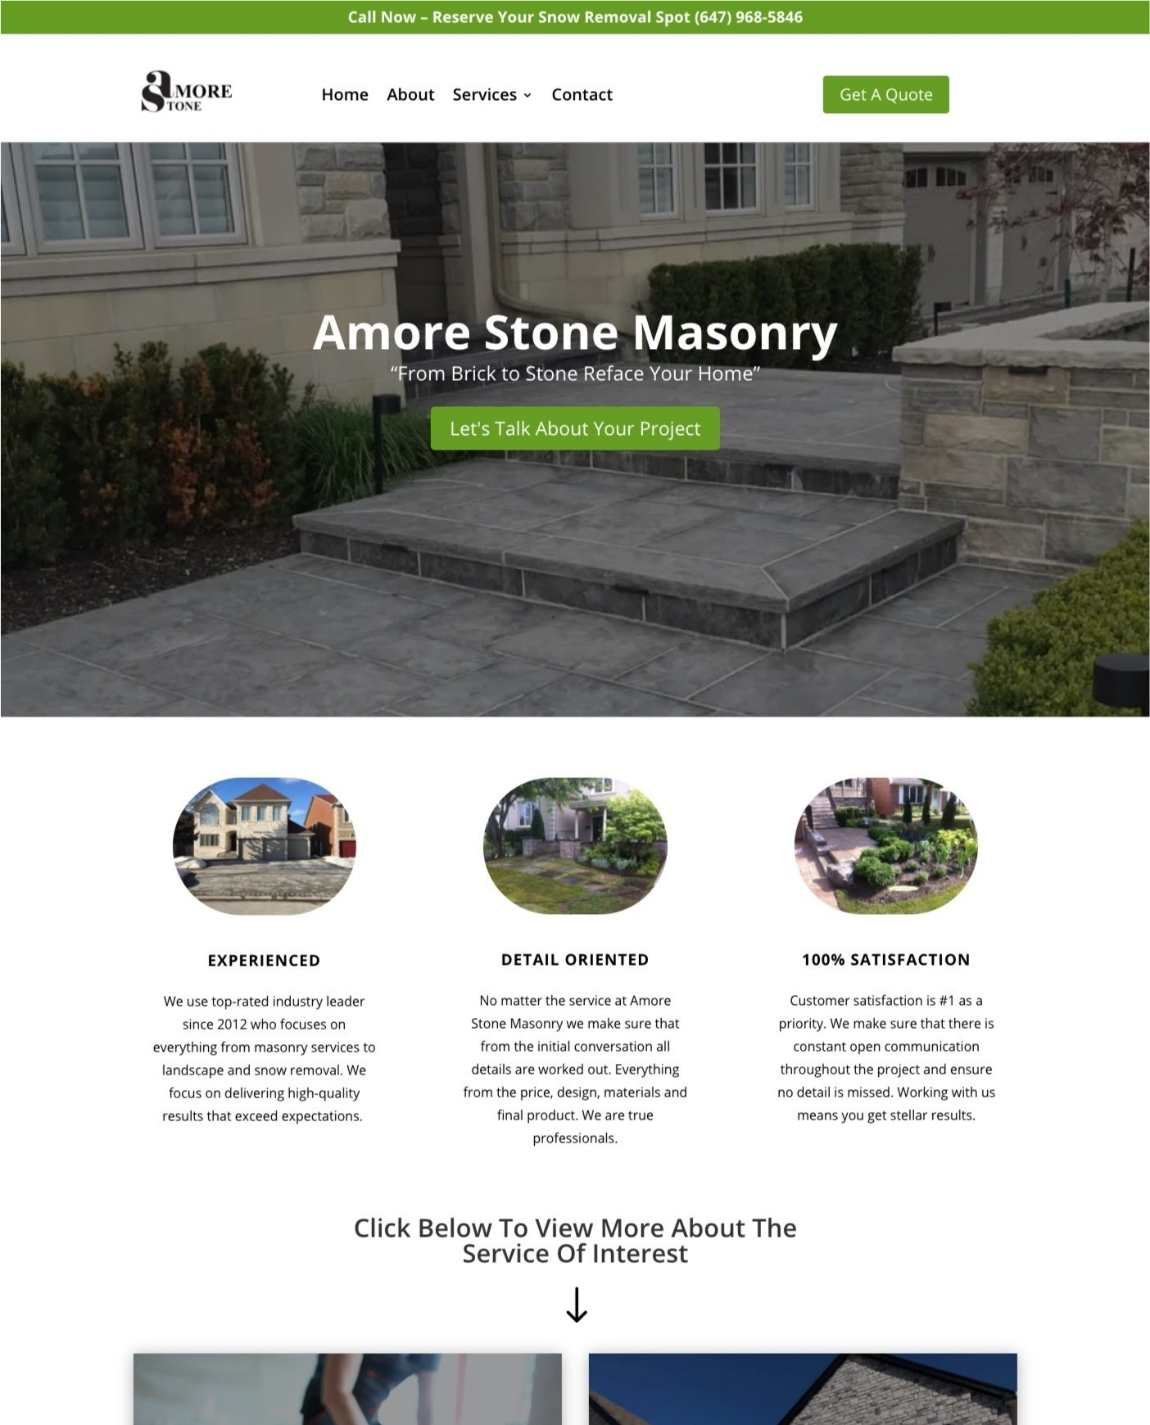 Amore Stone Masonry